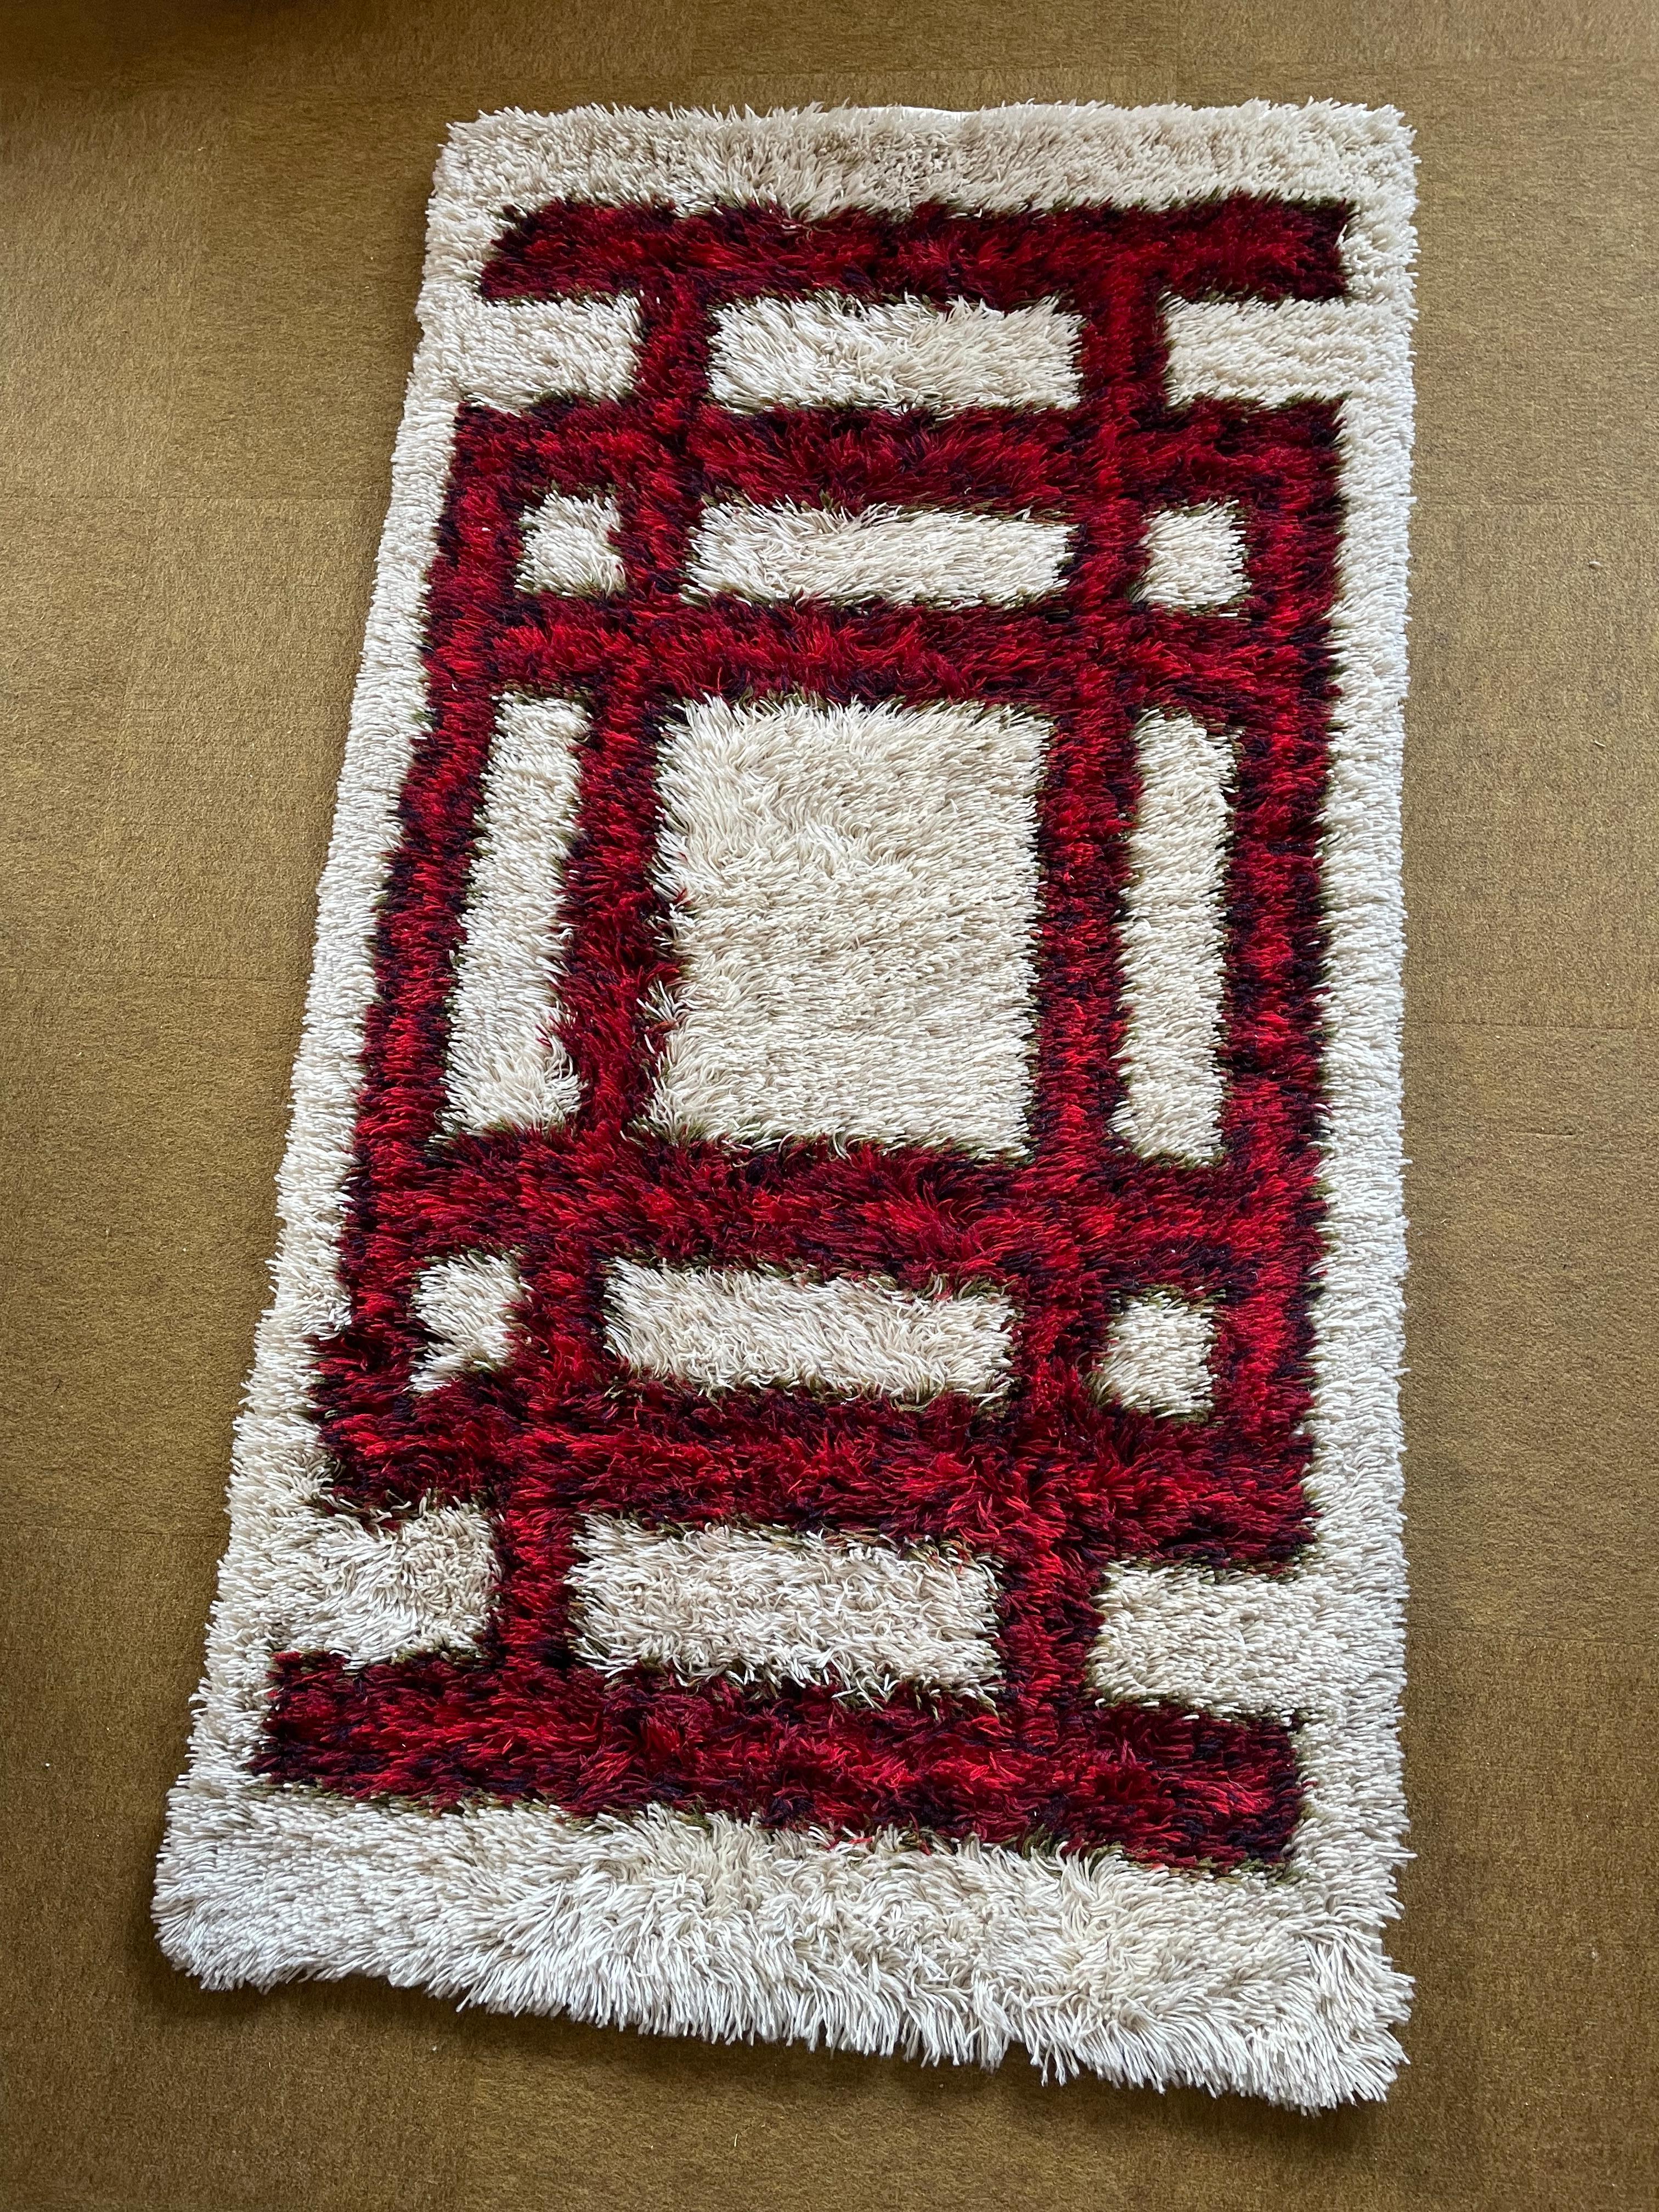 Article:

high pile rya rug

Origin:
Denmark

Producer:
Hojer Eksport Wilton, Denmark

Description:
this rug is a great example of 60s pop art interior. made in high quality danish rya handmade weaving technique. This high quality RYA rug